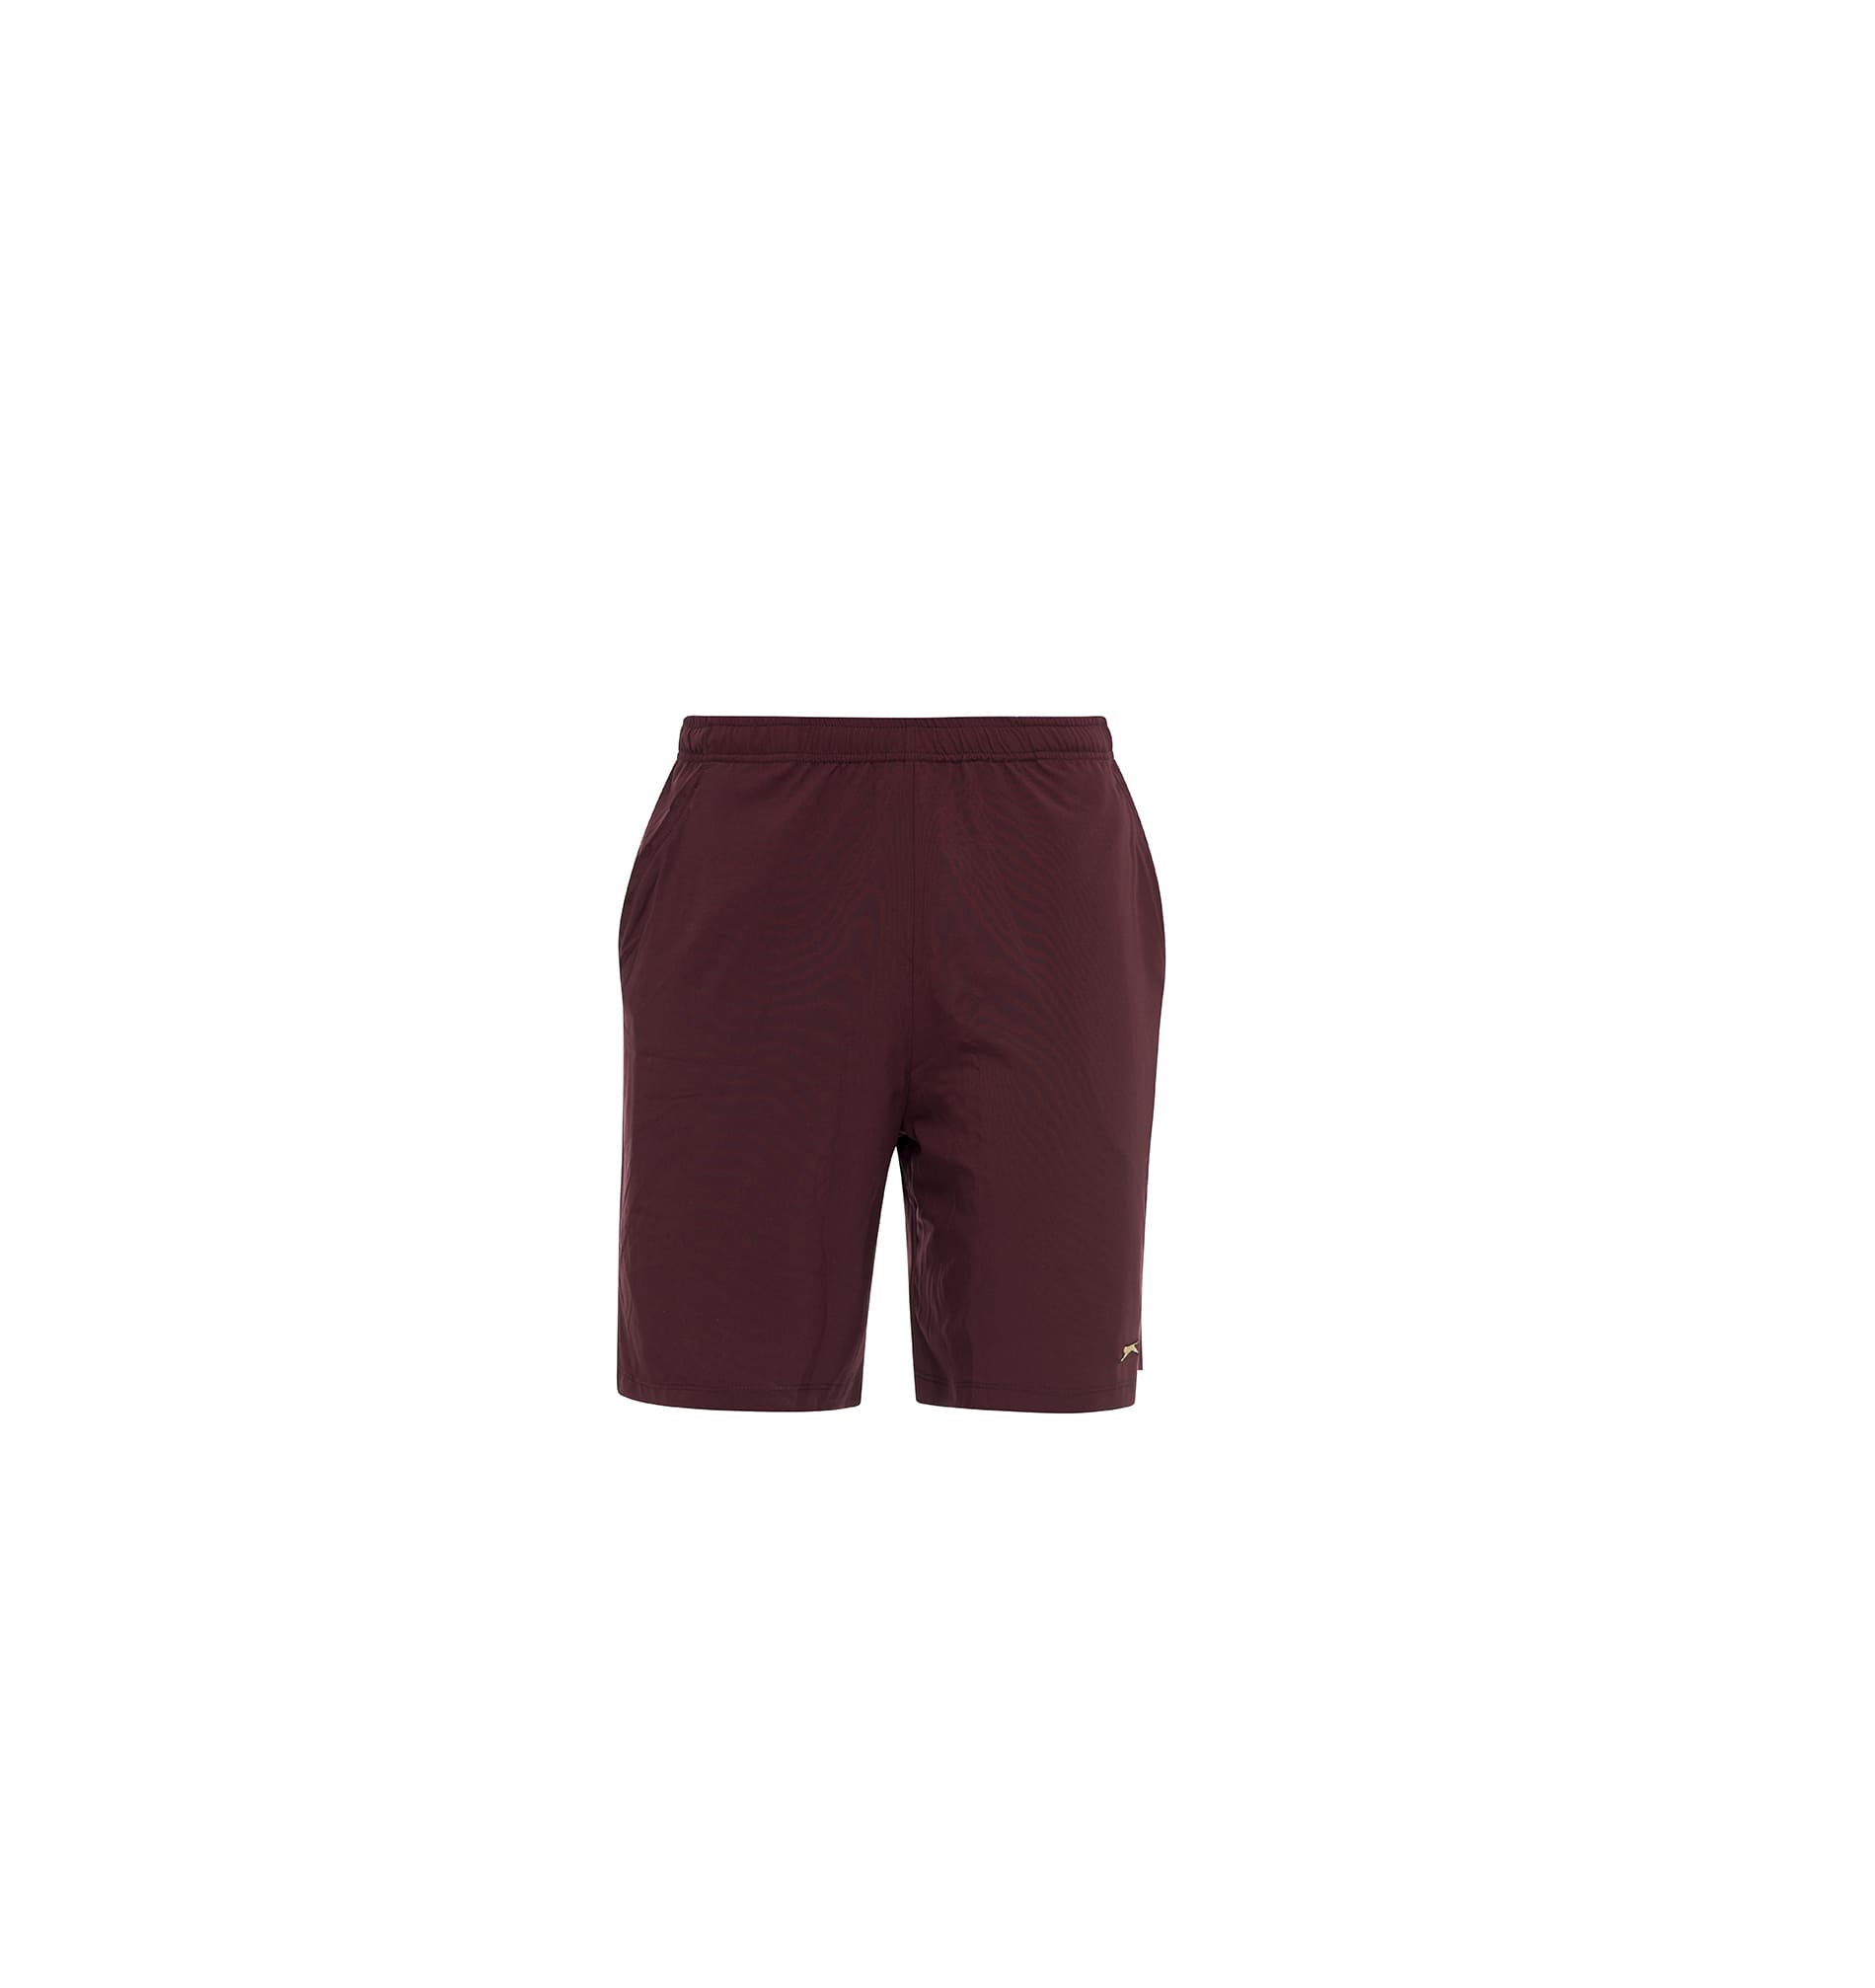 shorts slazenger burgundy